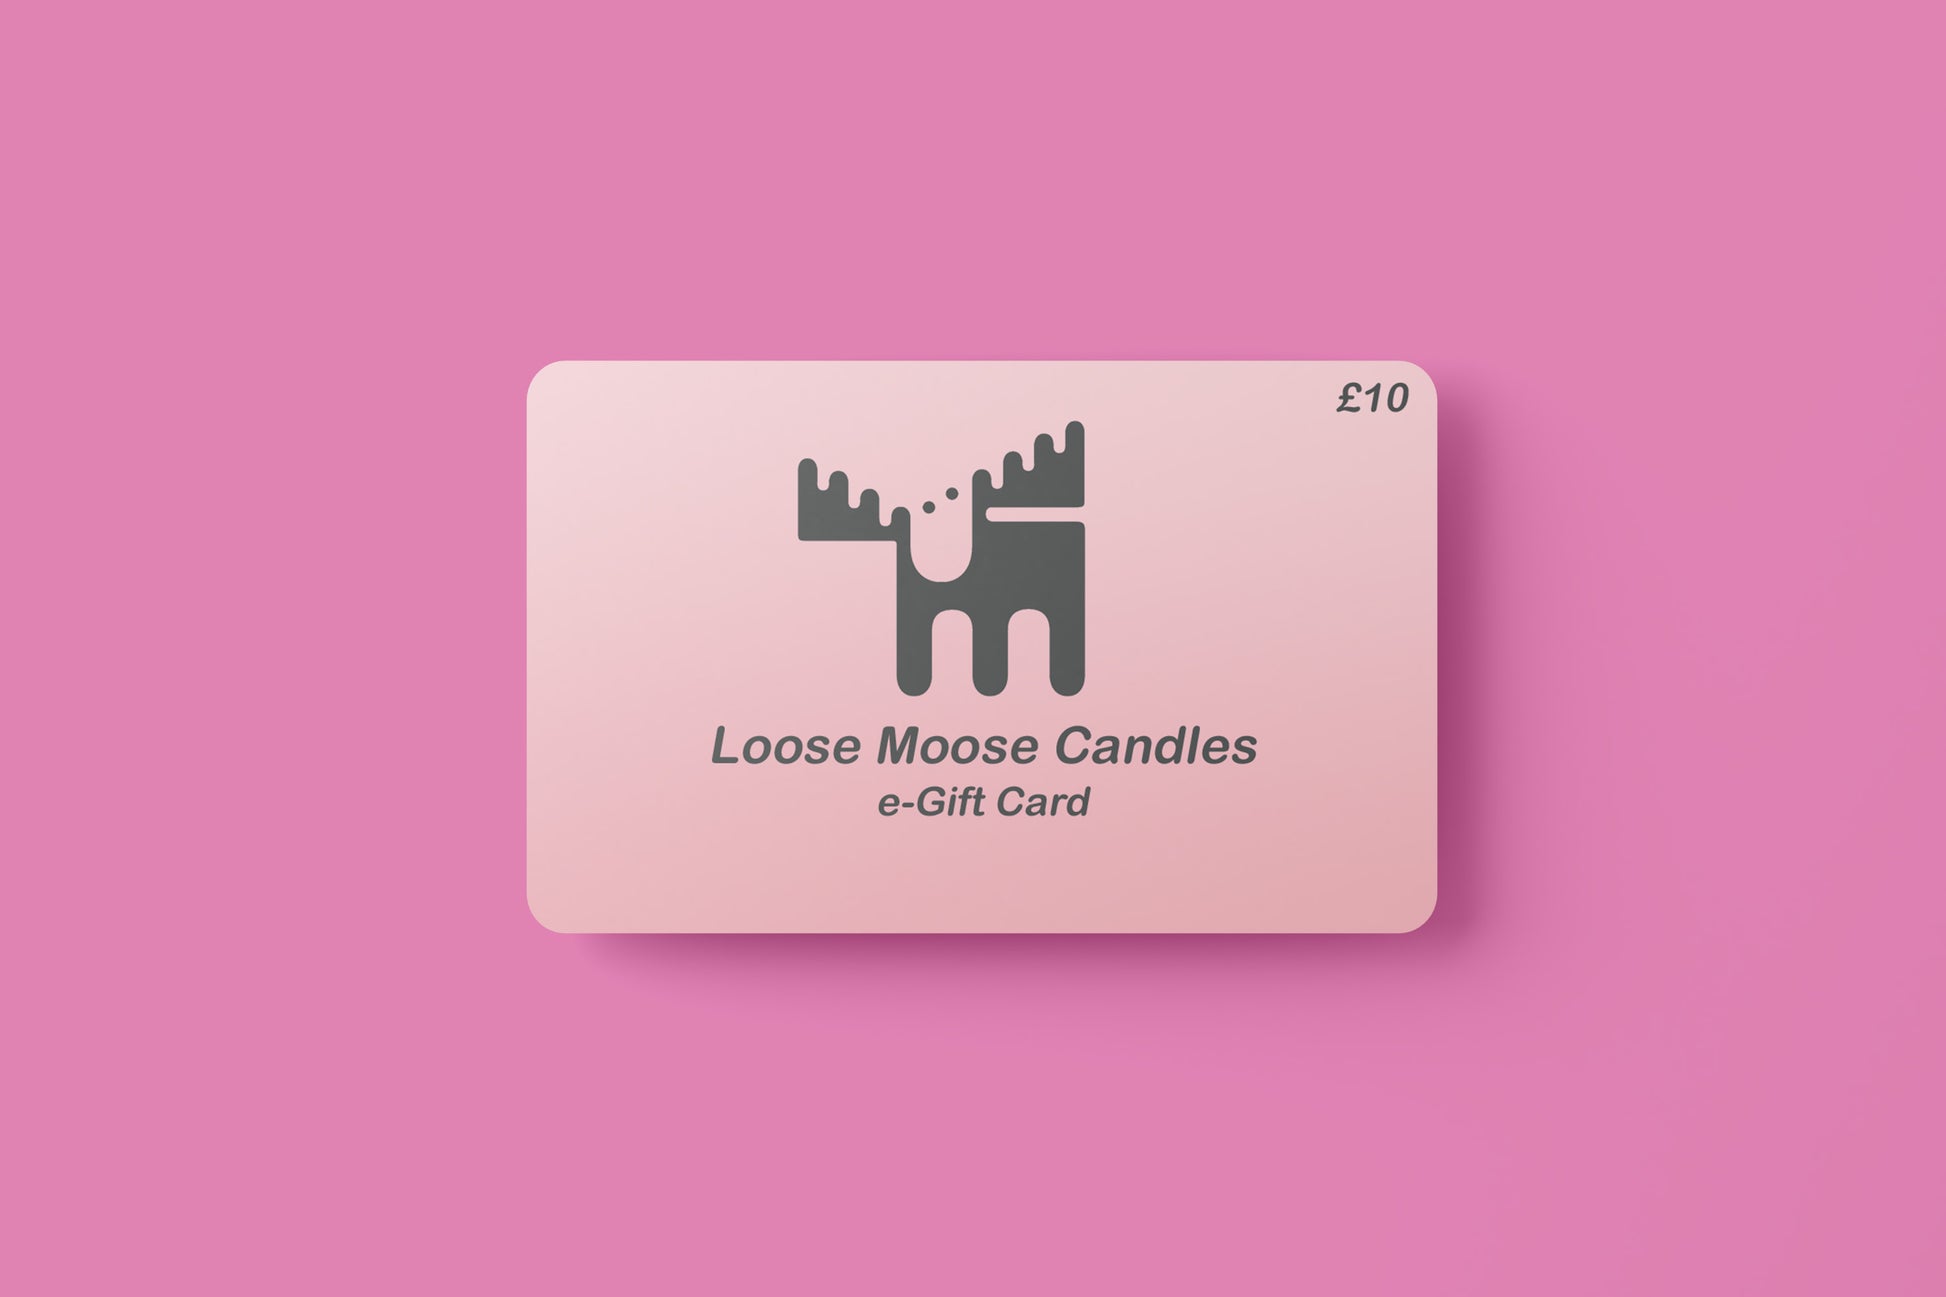 Loose Moose Candles e-Gift Card